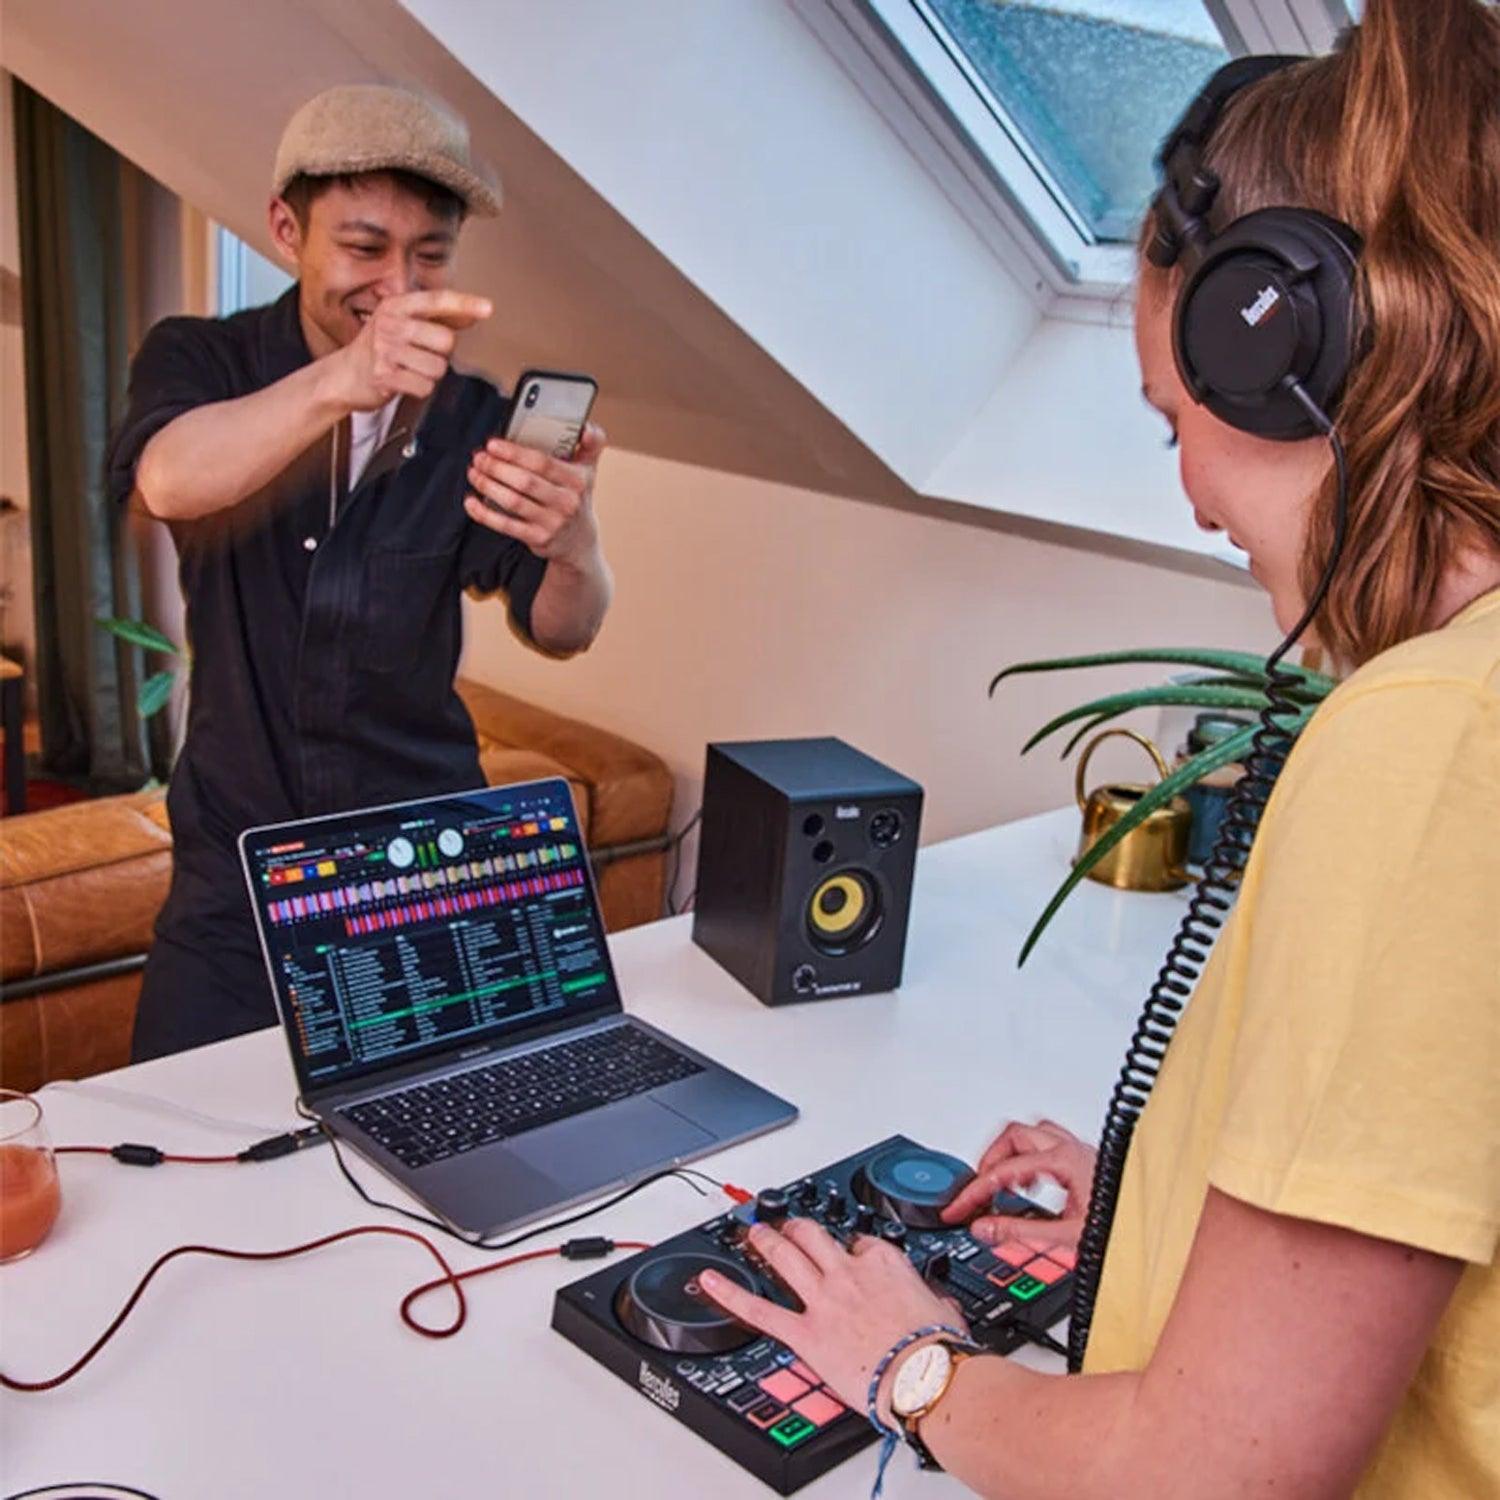 Hercules DJ Learning Kit MK2 With Inpulse 200, Monitors & Headphones - DY Pro Audio